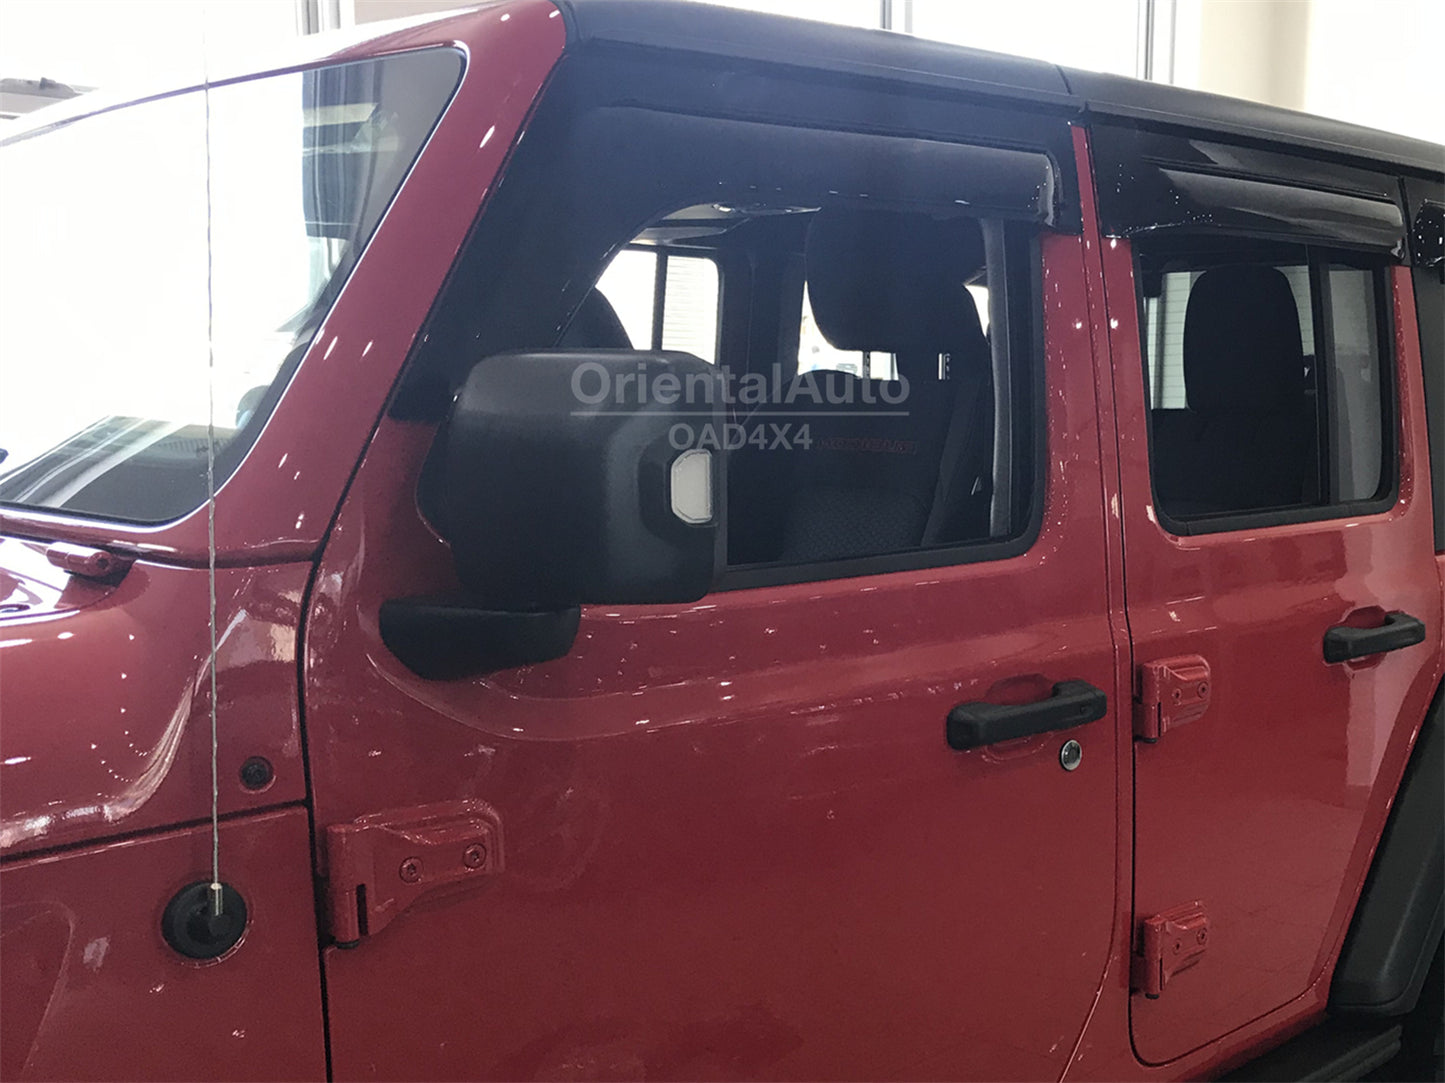 Widened 4pcs Luxury Weathershields For Jeep Wrangler JL series 2018+ Weather Shields Window Visor